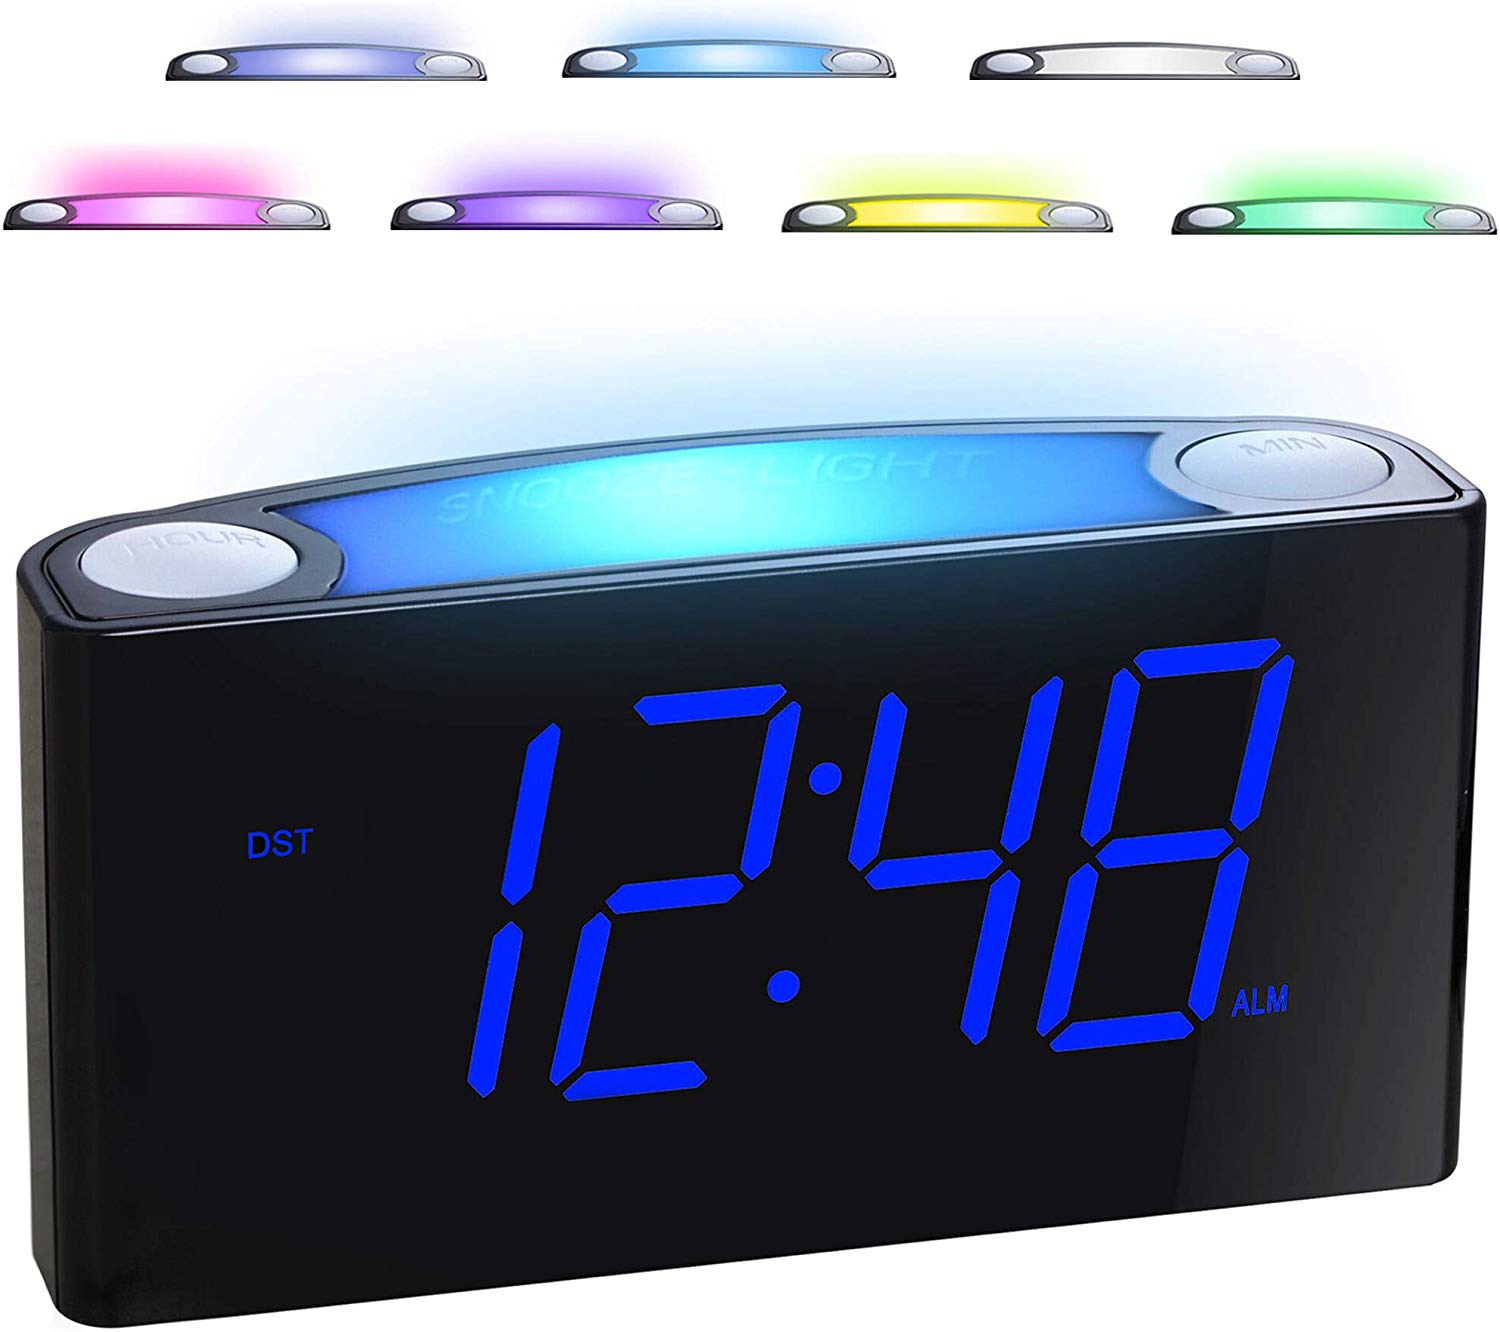 Mesqool 7 Color Alarm Clock & Night Light